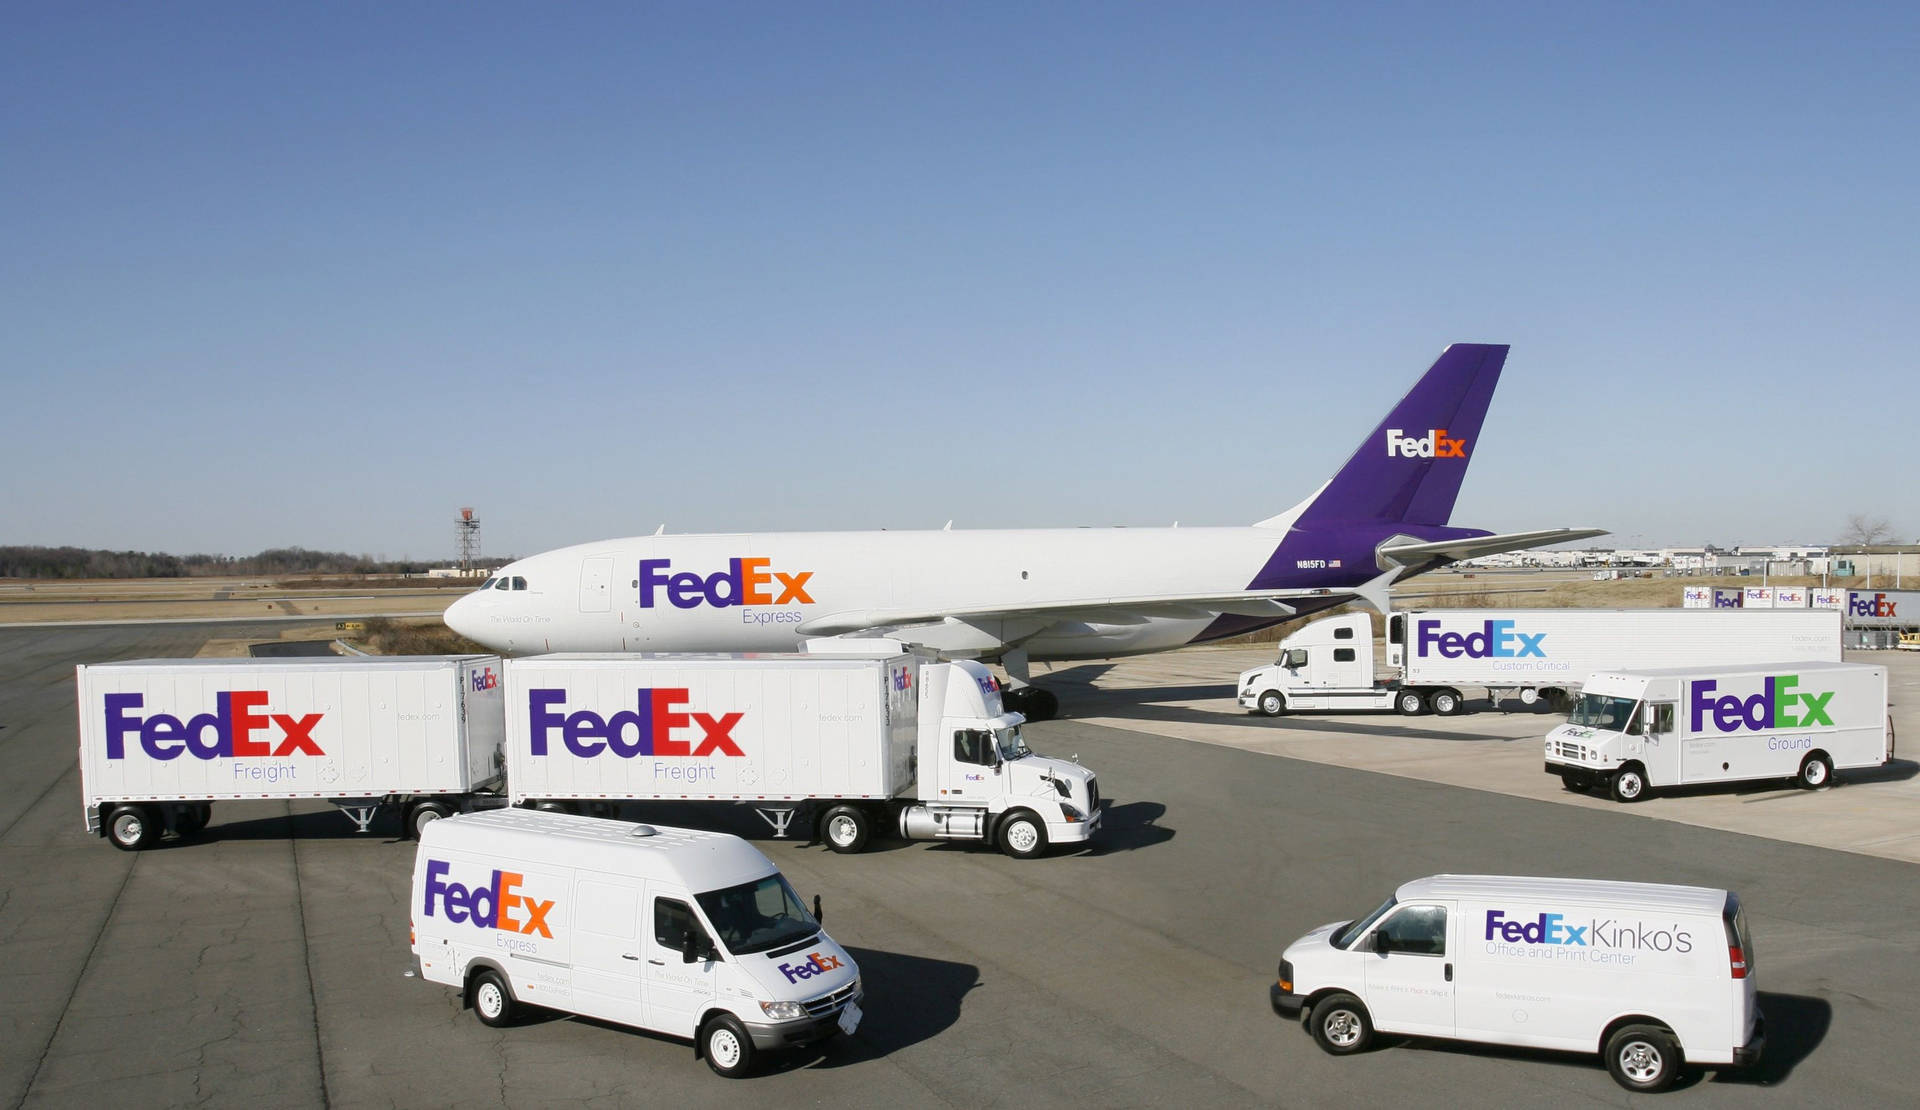 Fedex Courier Transportation Background